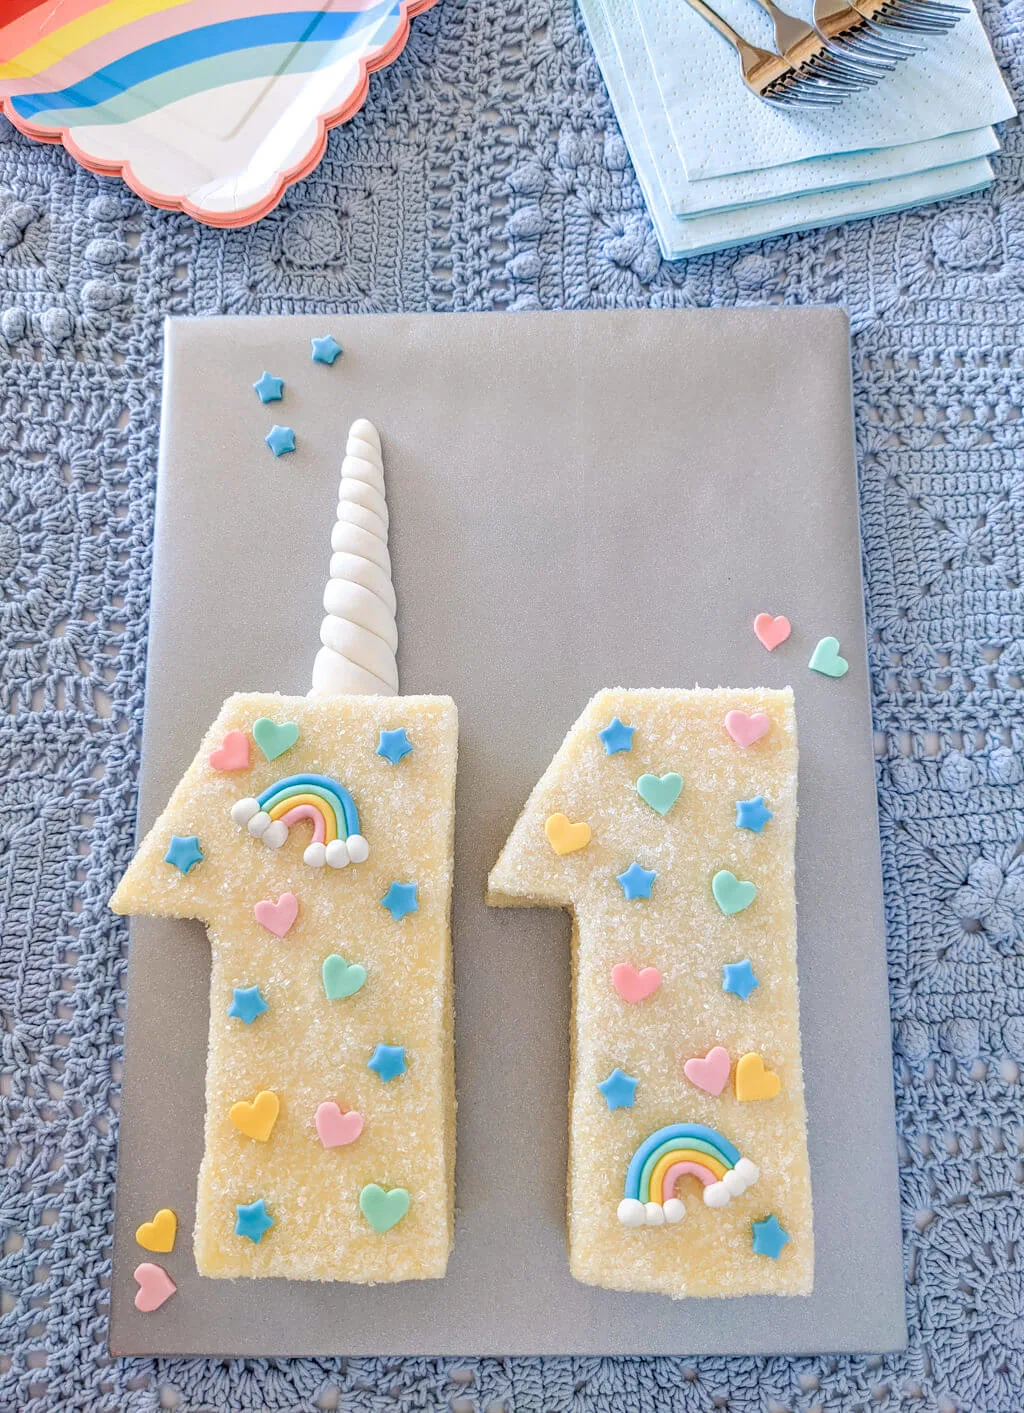 Easy DIY Unicorn Birthday Cake with Flowers - Better Life Blog | Recipe |  Diy unicorn birthday cake, Cake, Birthday cake with flowers